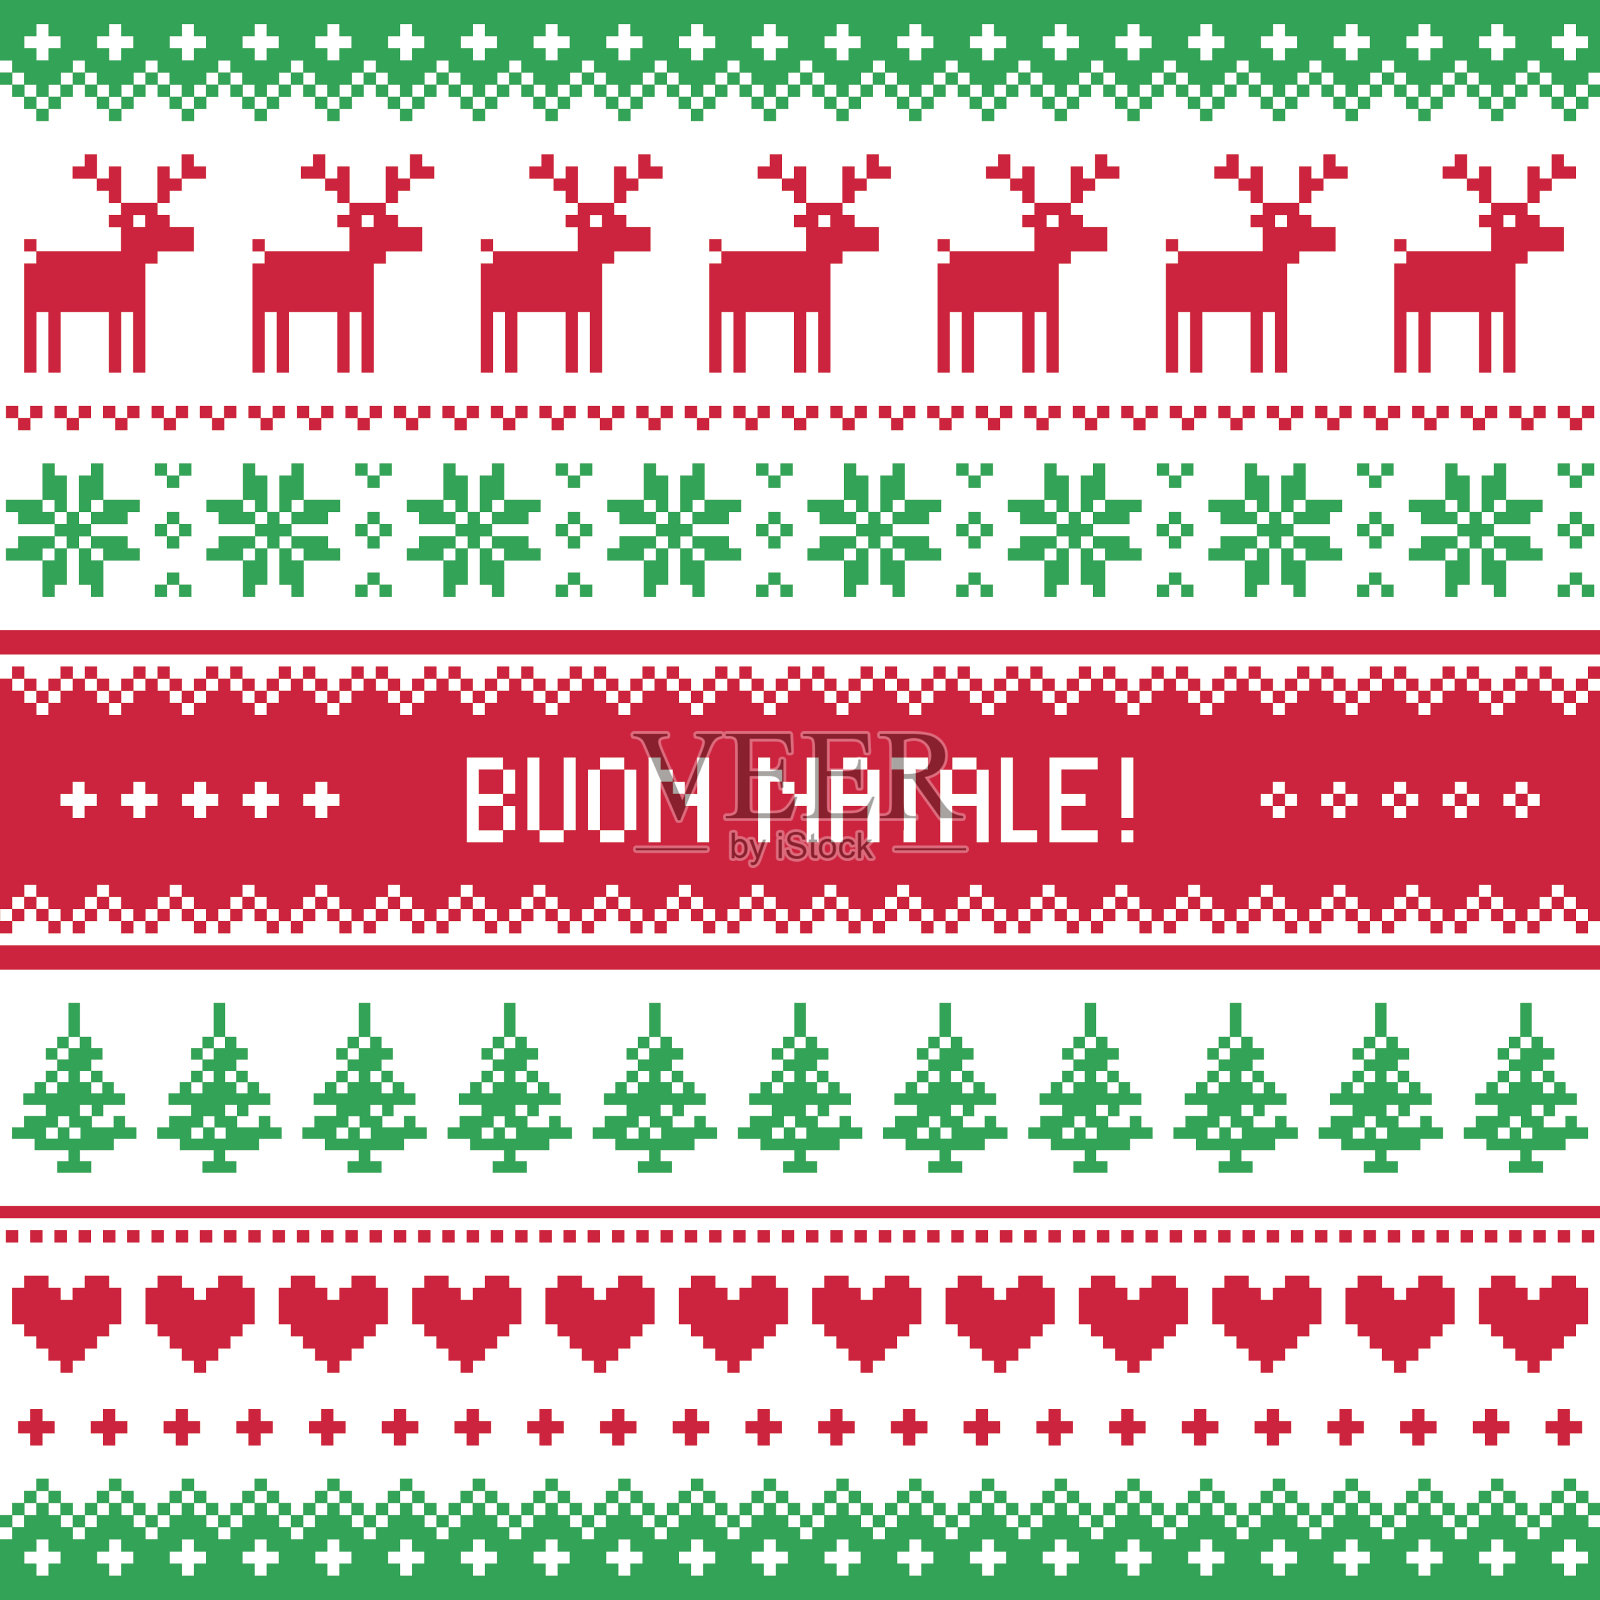 Buon Natale卡片-斯堪的纳维亚圣诞图案插画图片素材